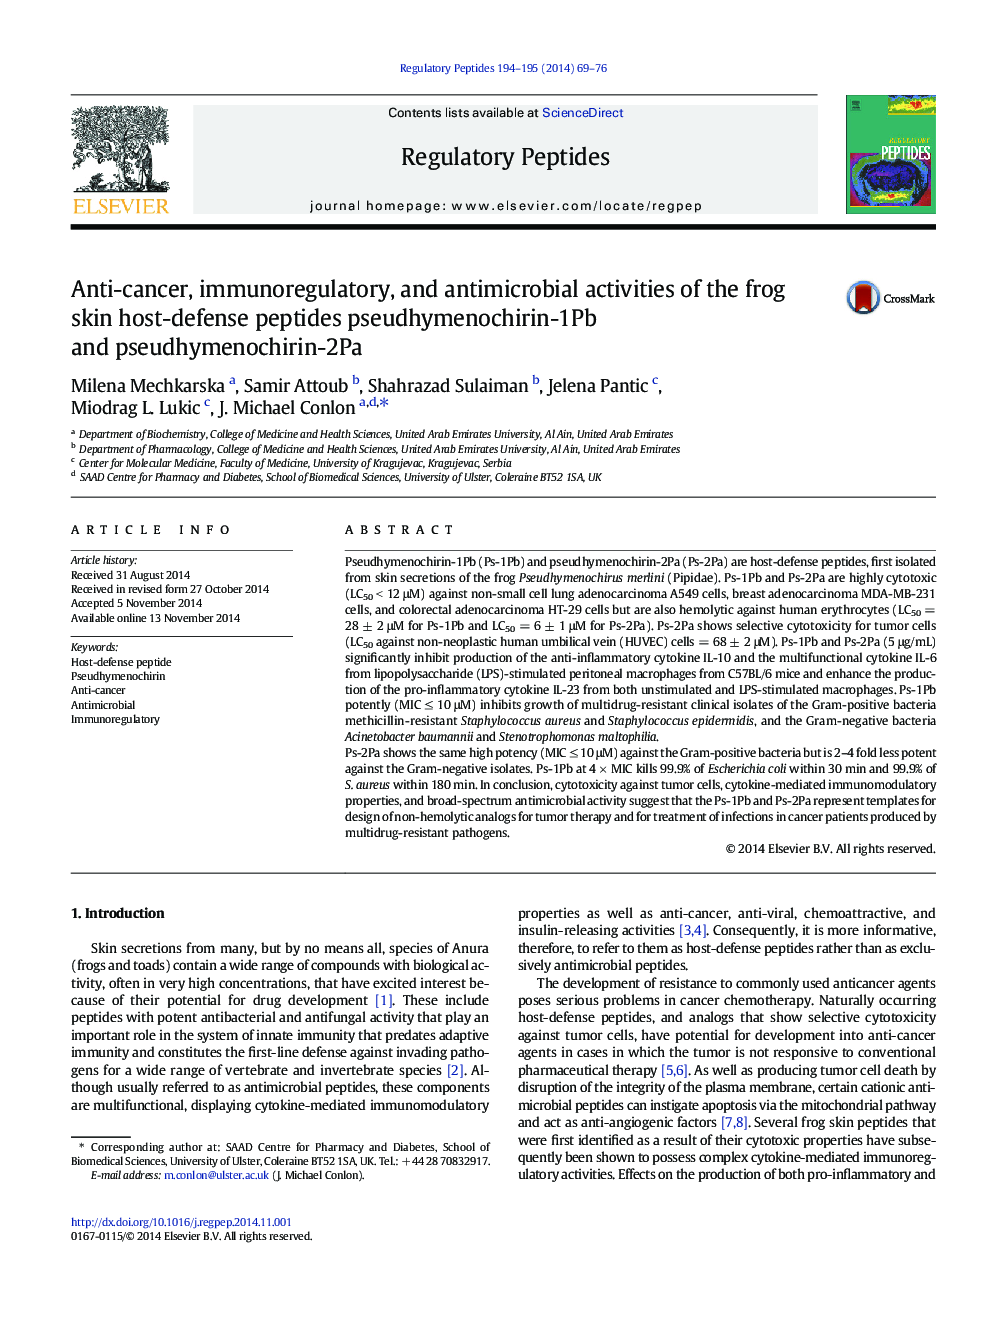 Anti-cancer, immunoregulatory, and antimicrobial activities of the frog skin host-defense peptides pseudhymenochirin-1Pb and pseudhymenochirin-2Pa